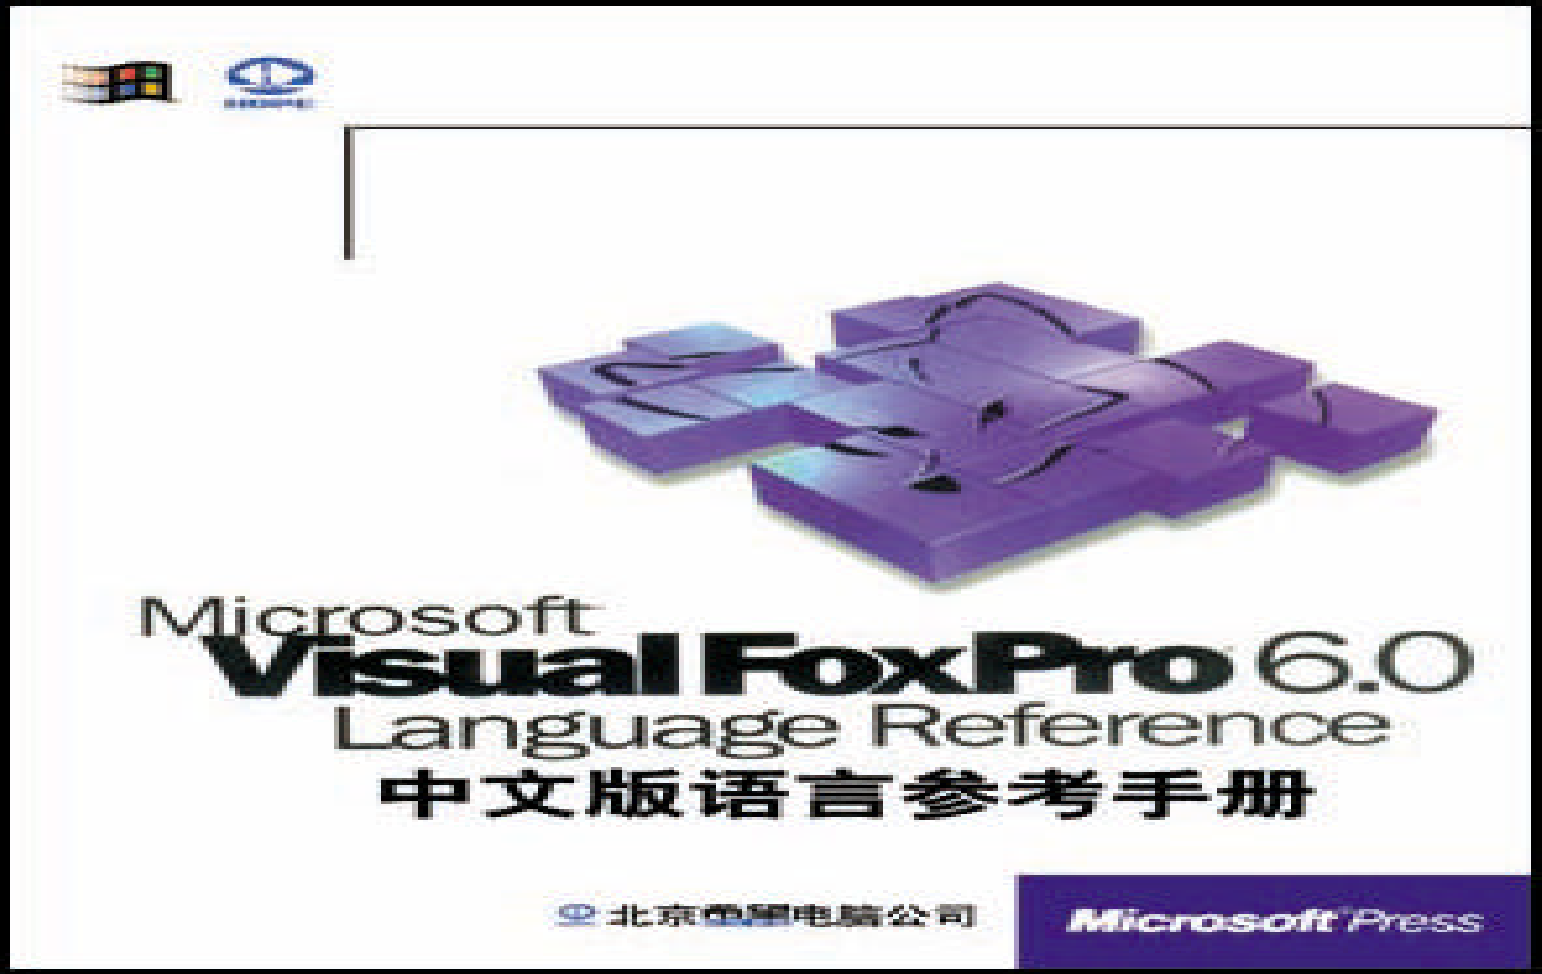 Foxpro